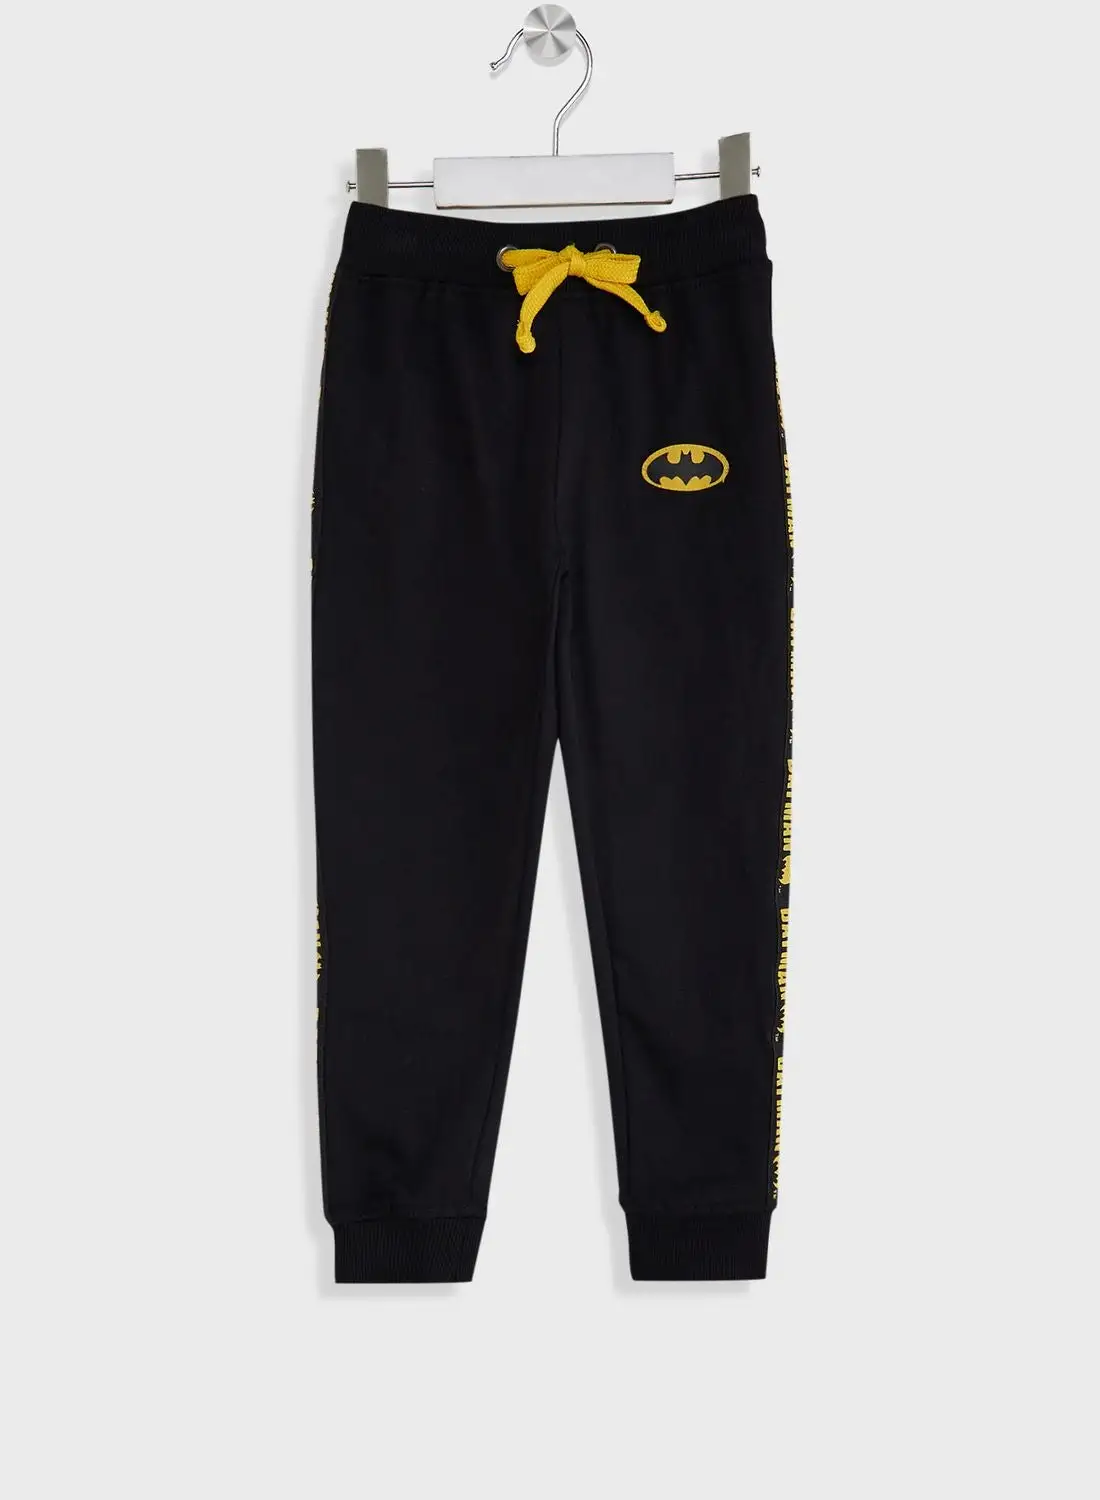 Batman Boys Batman Printed Sweatpants